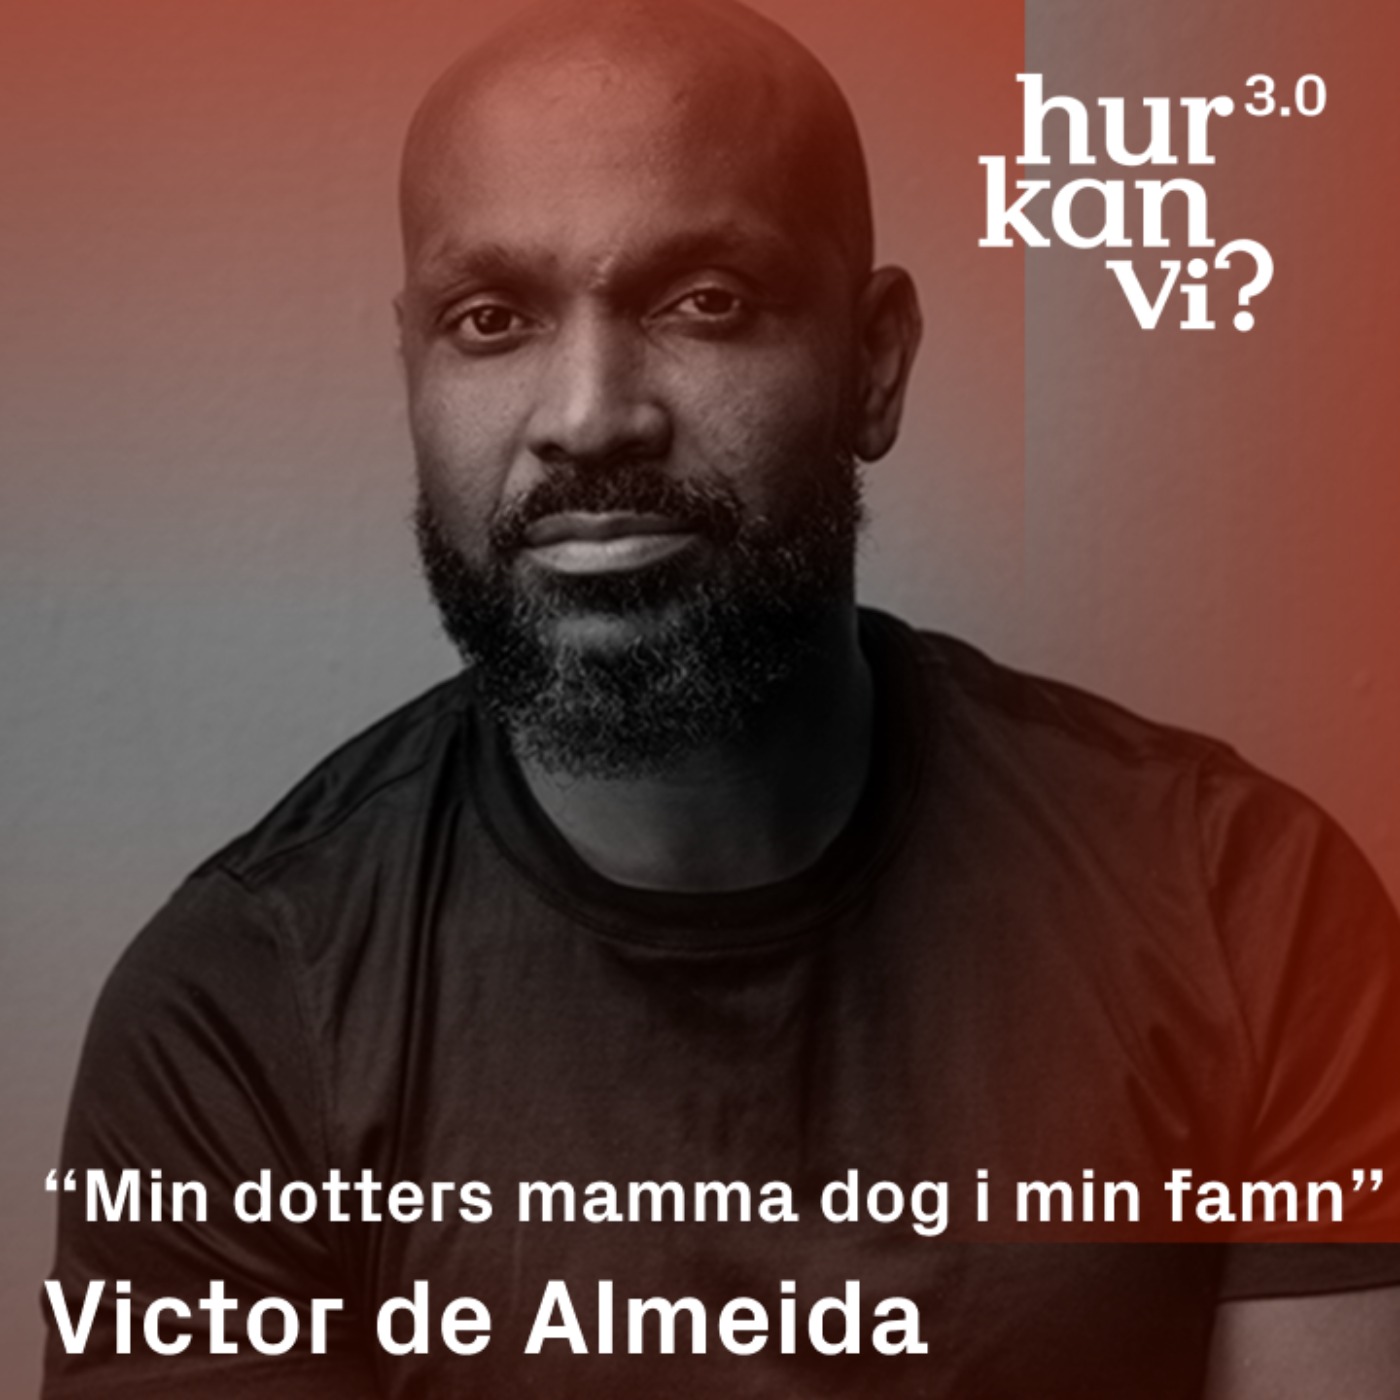 Victor de Almeida - “Min dotters mamma dog i min famn”